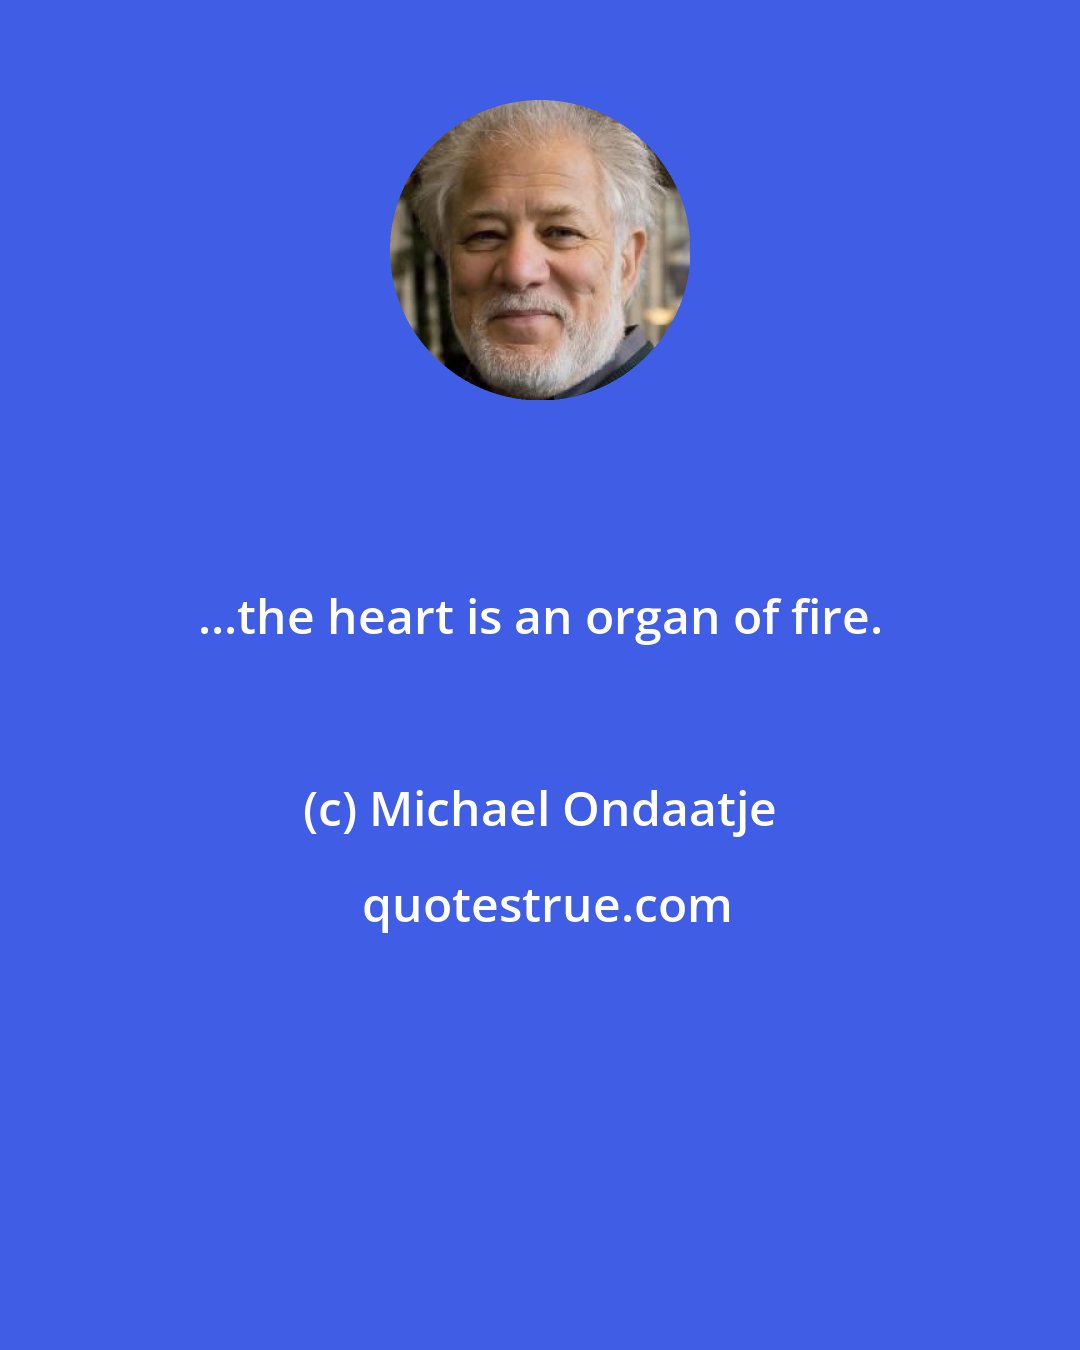 Michael Ondaatje: ...the heart is an organ of fire.